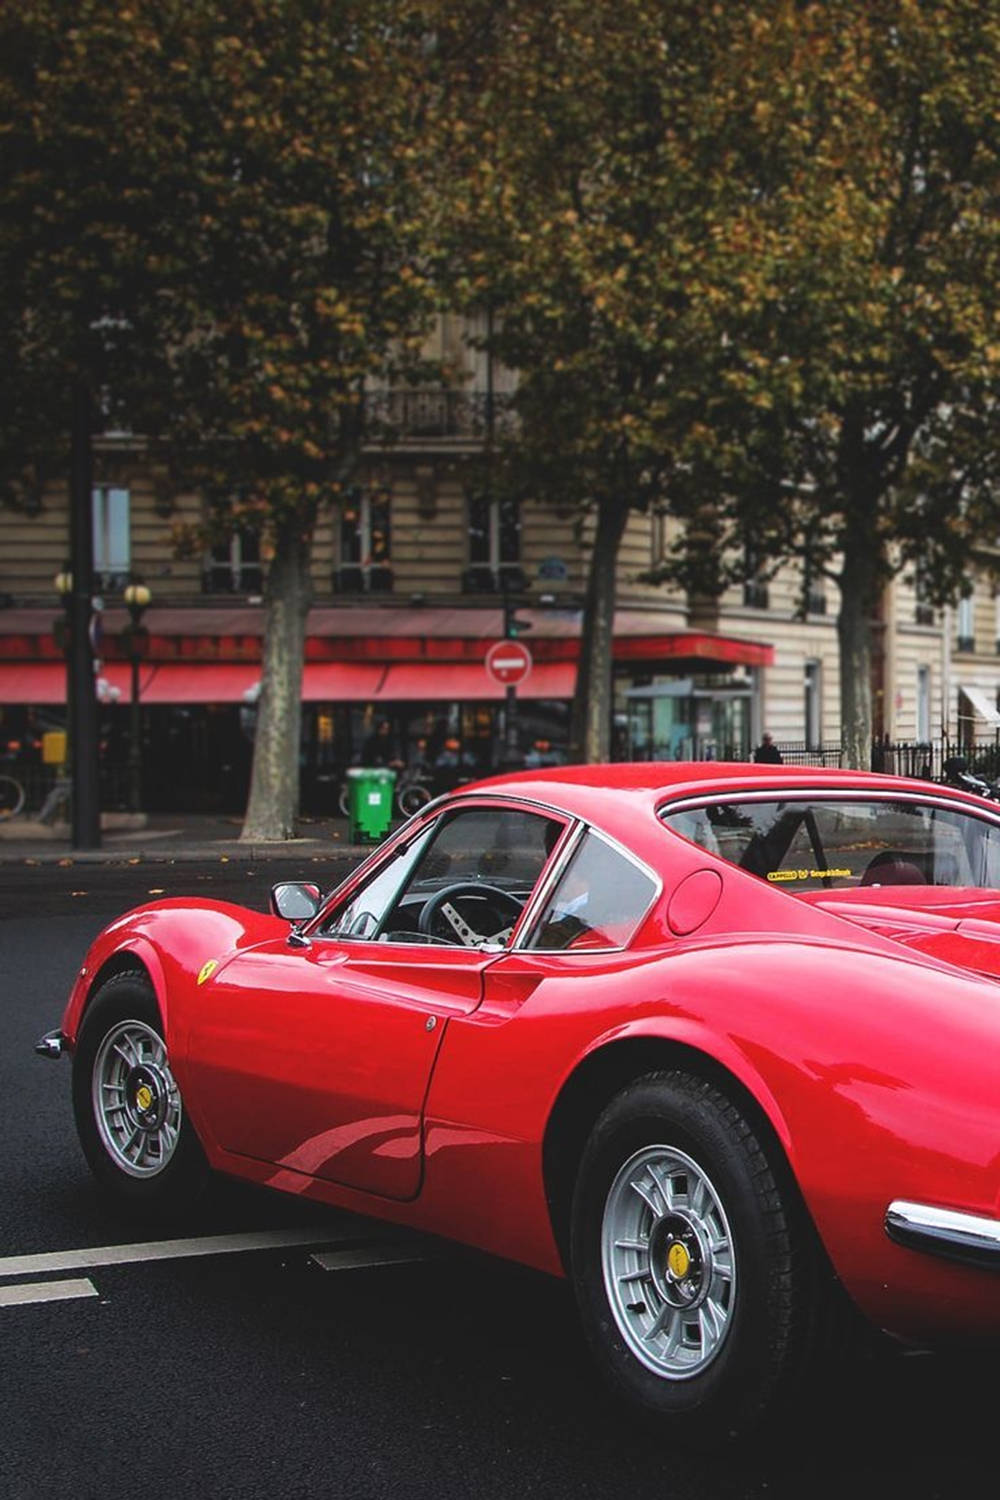 Red Ferrari Luxury Coupe Car Phone Background